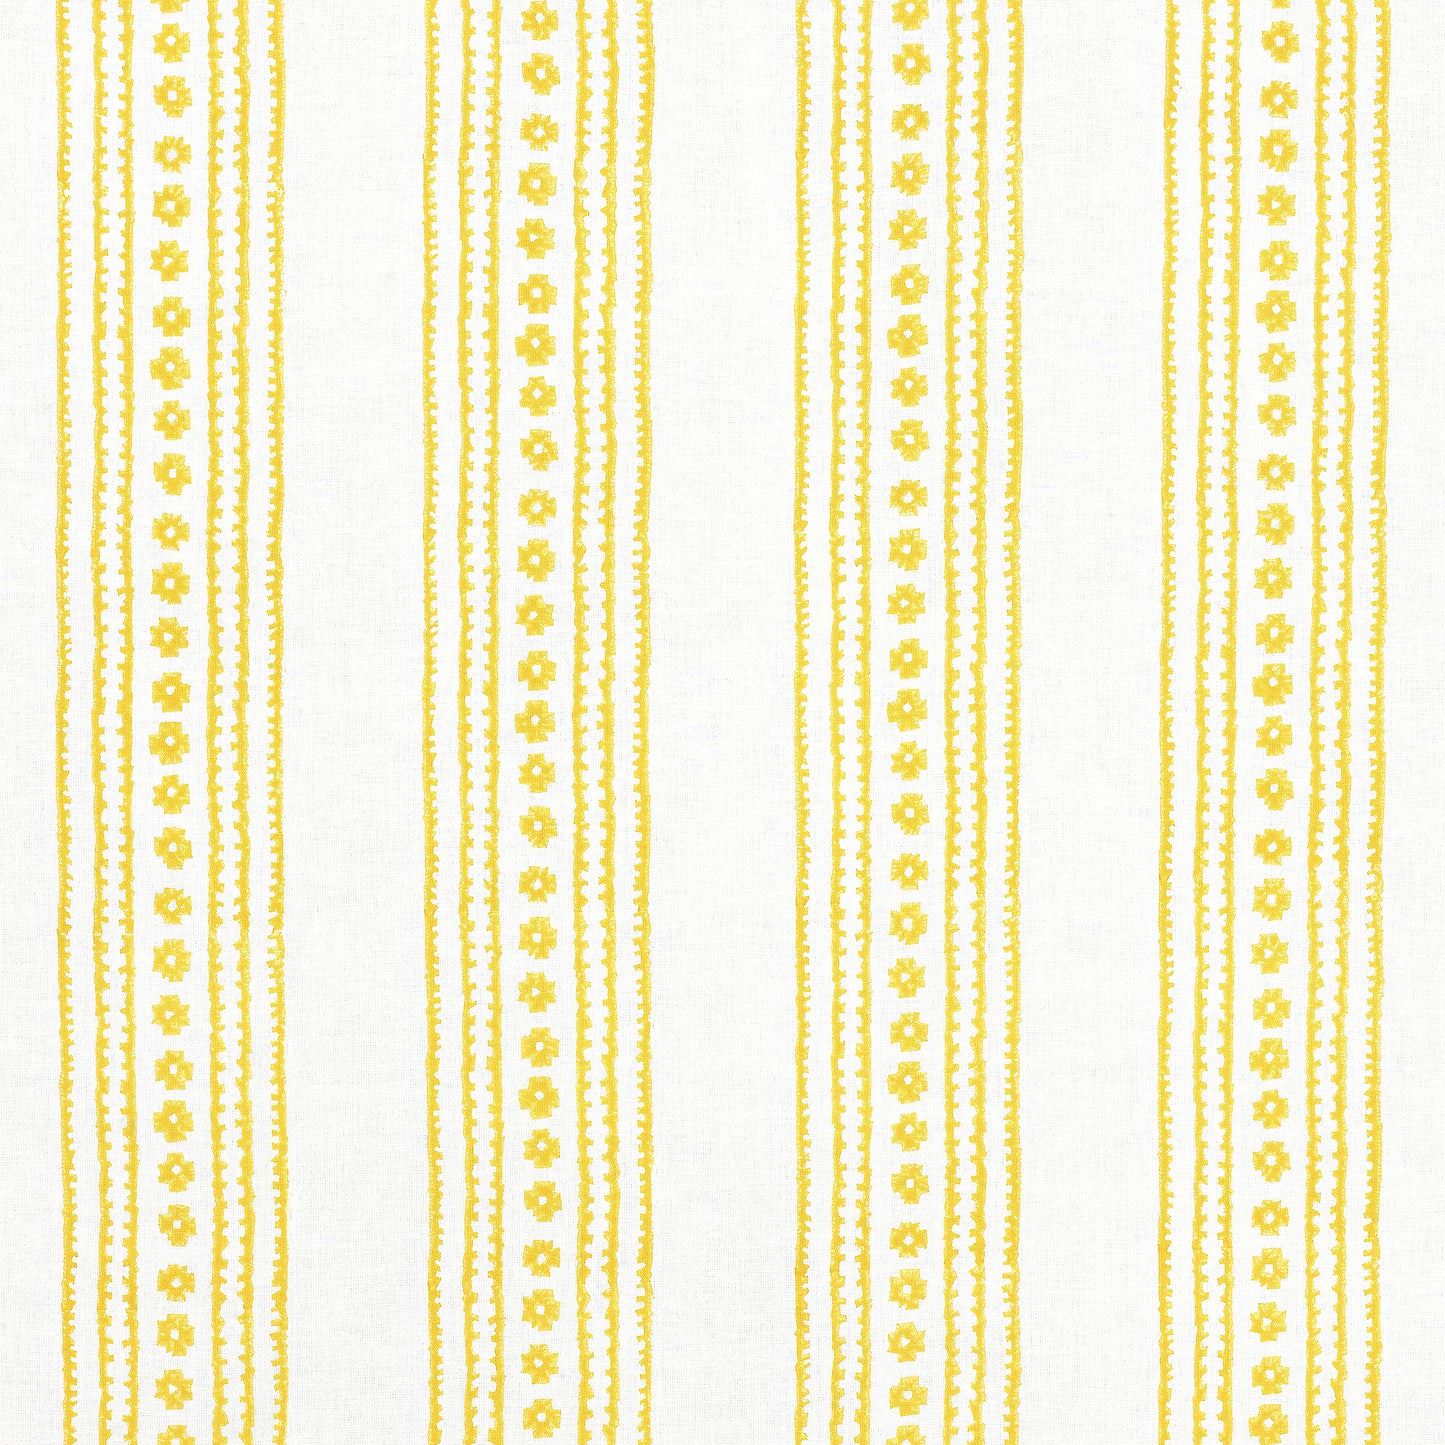 Buy samples of F910610 New Haven Stripe Printed Ceylon Thibaut Fabrics